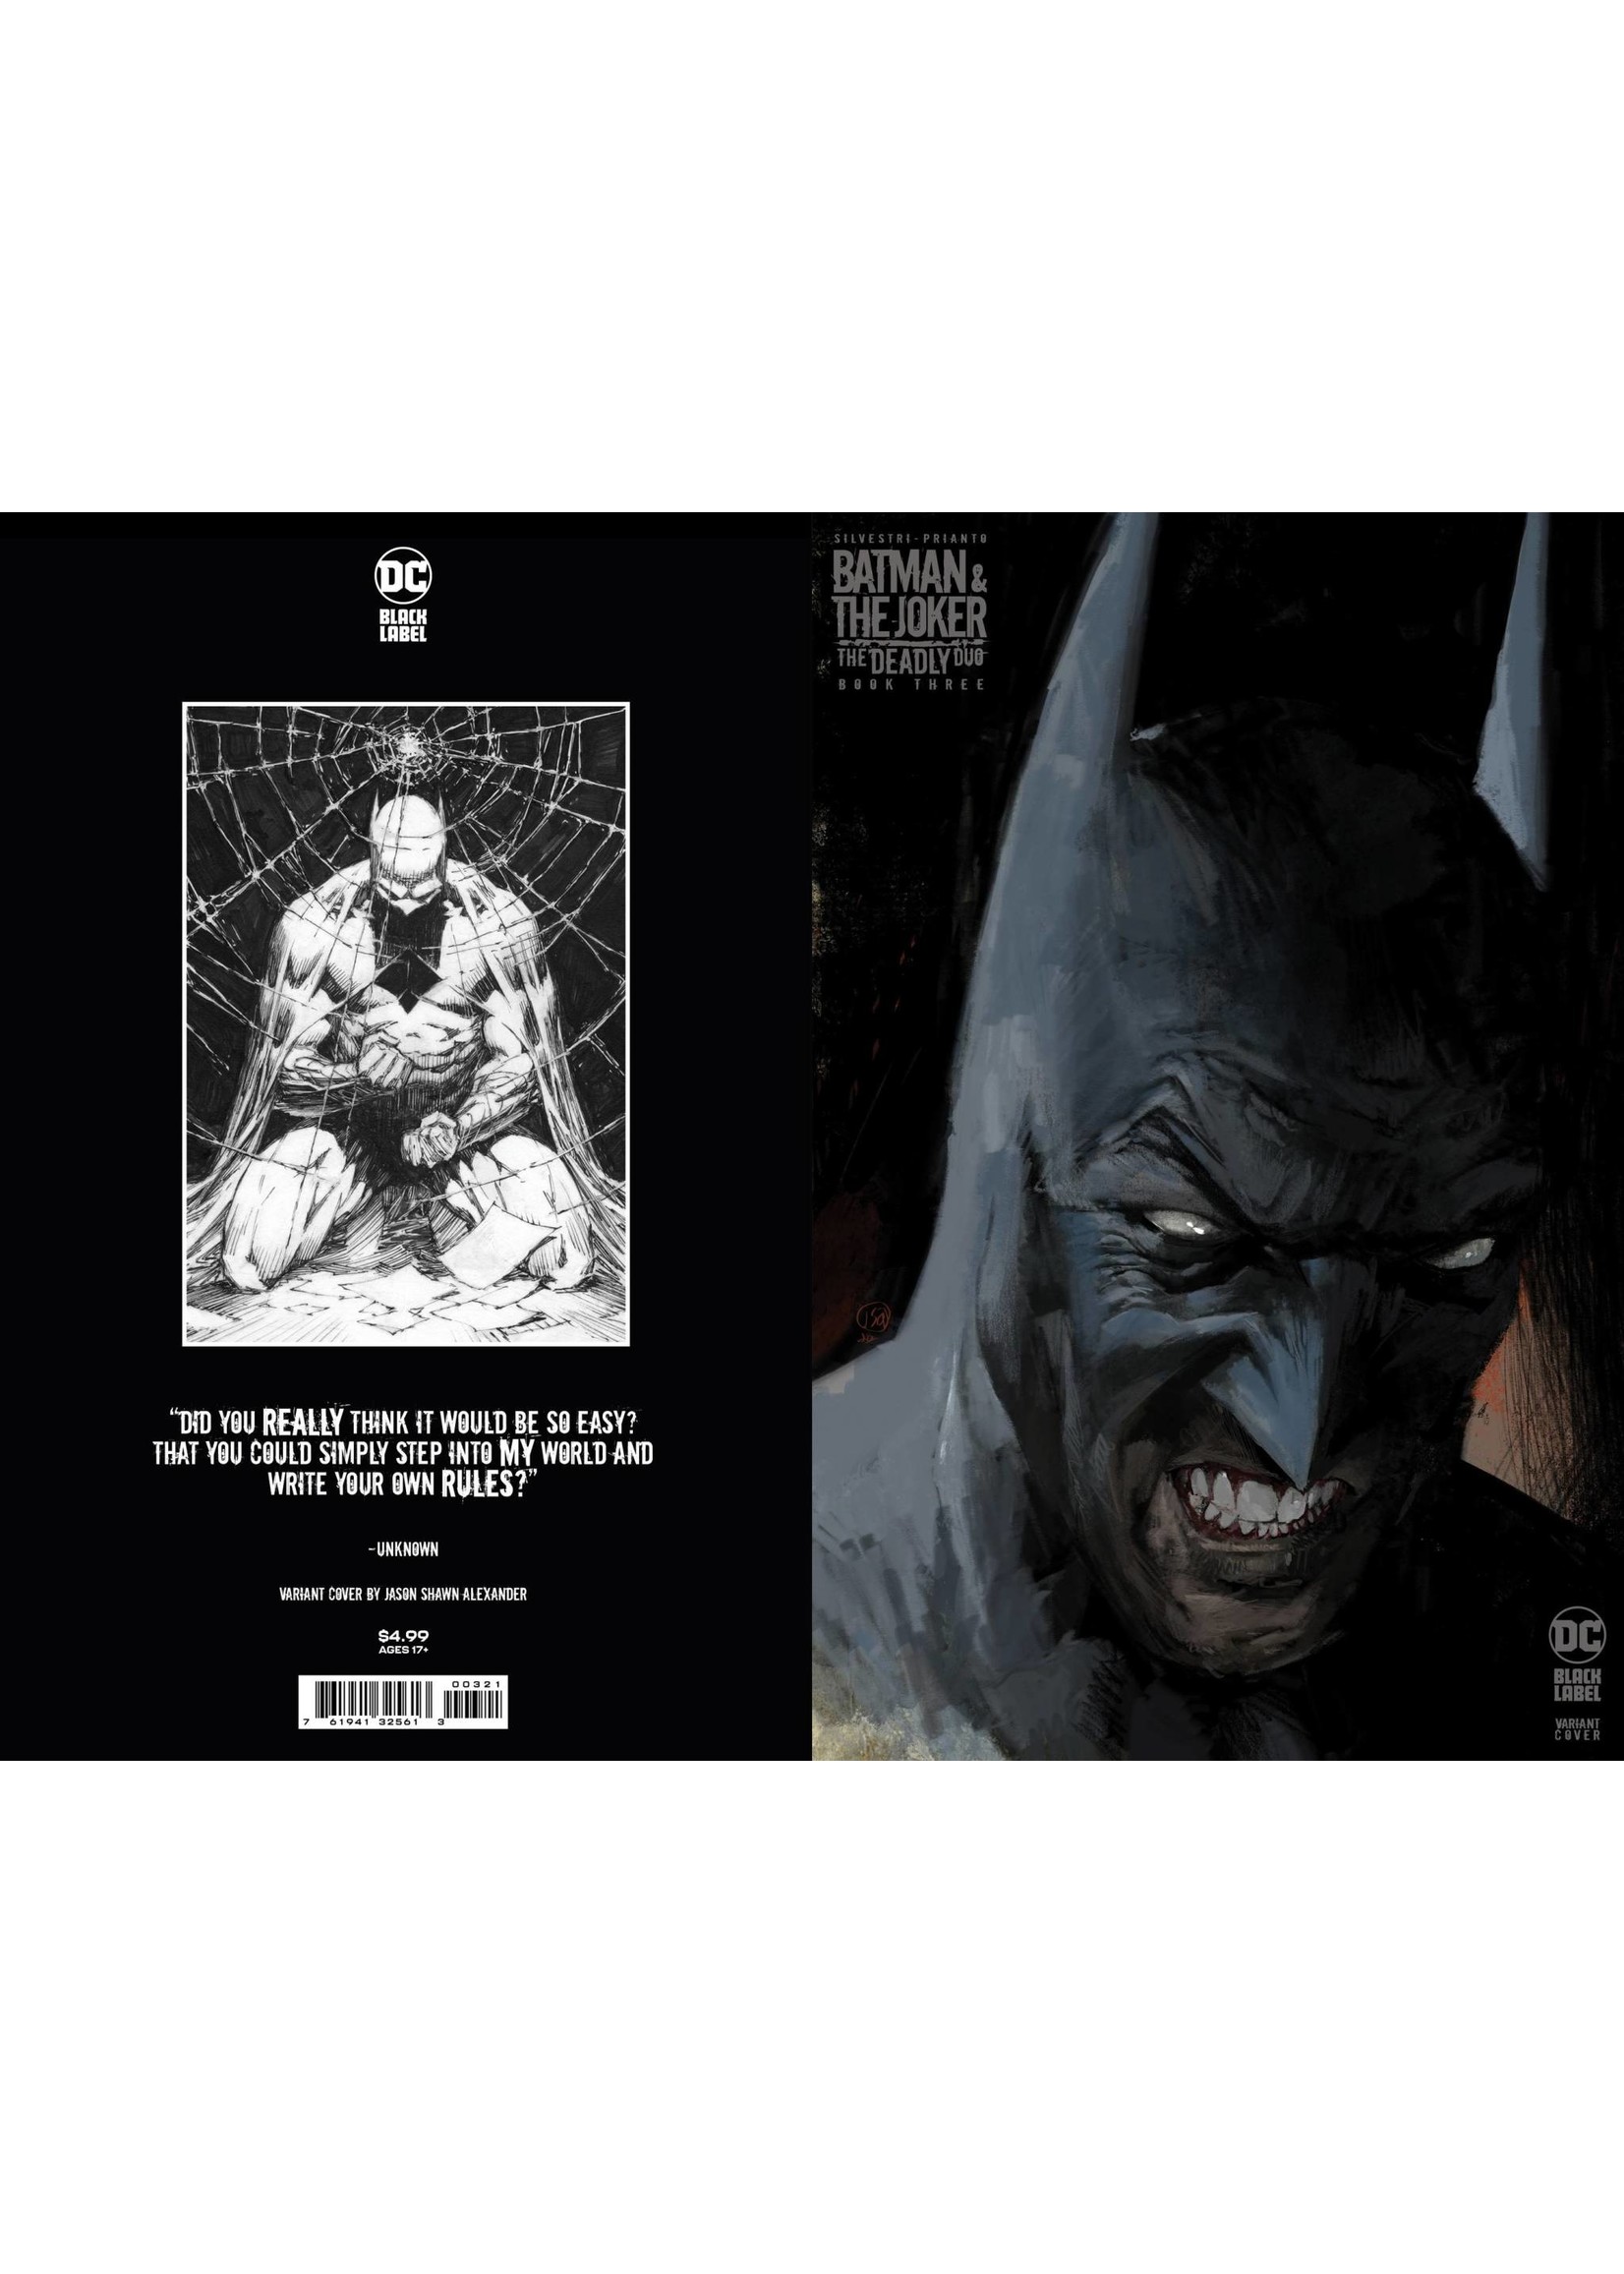 DC COMICS BATMAN/JOKER THE DEADLY DUO #3 BATMAN ALEXANDER